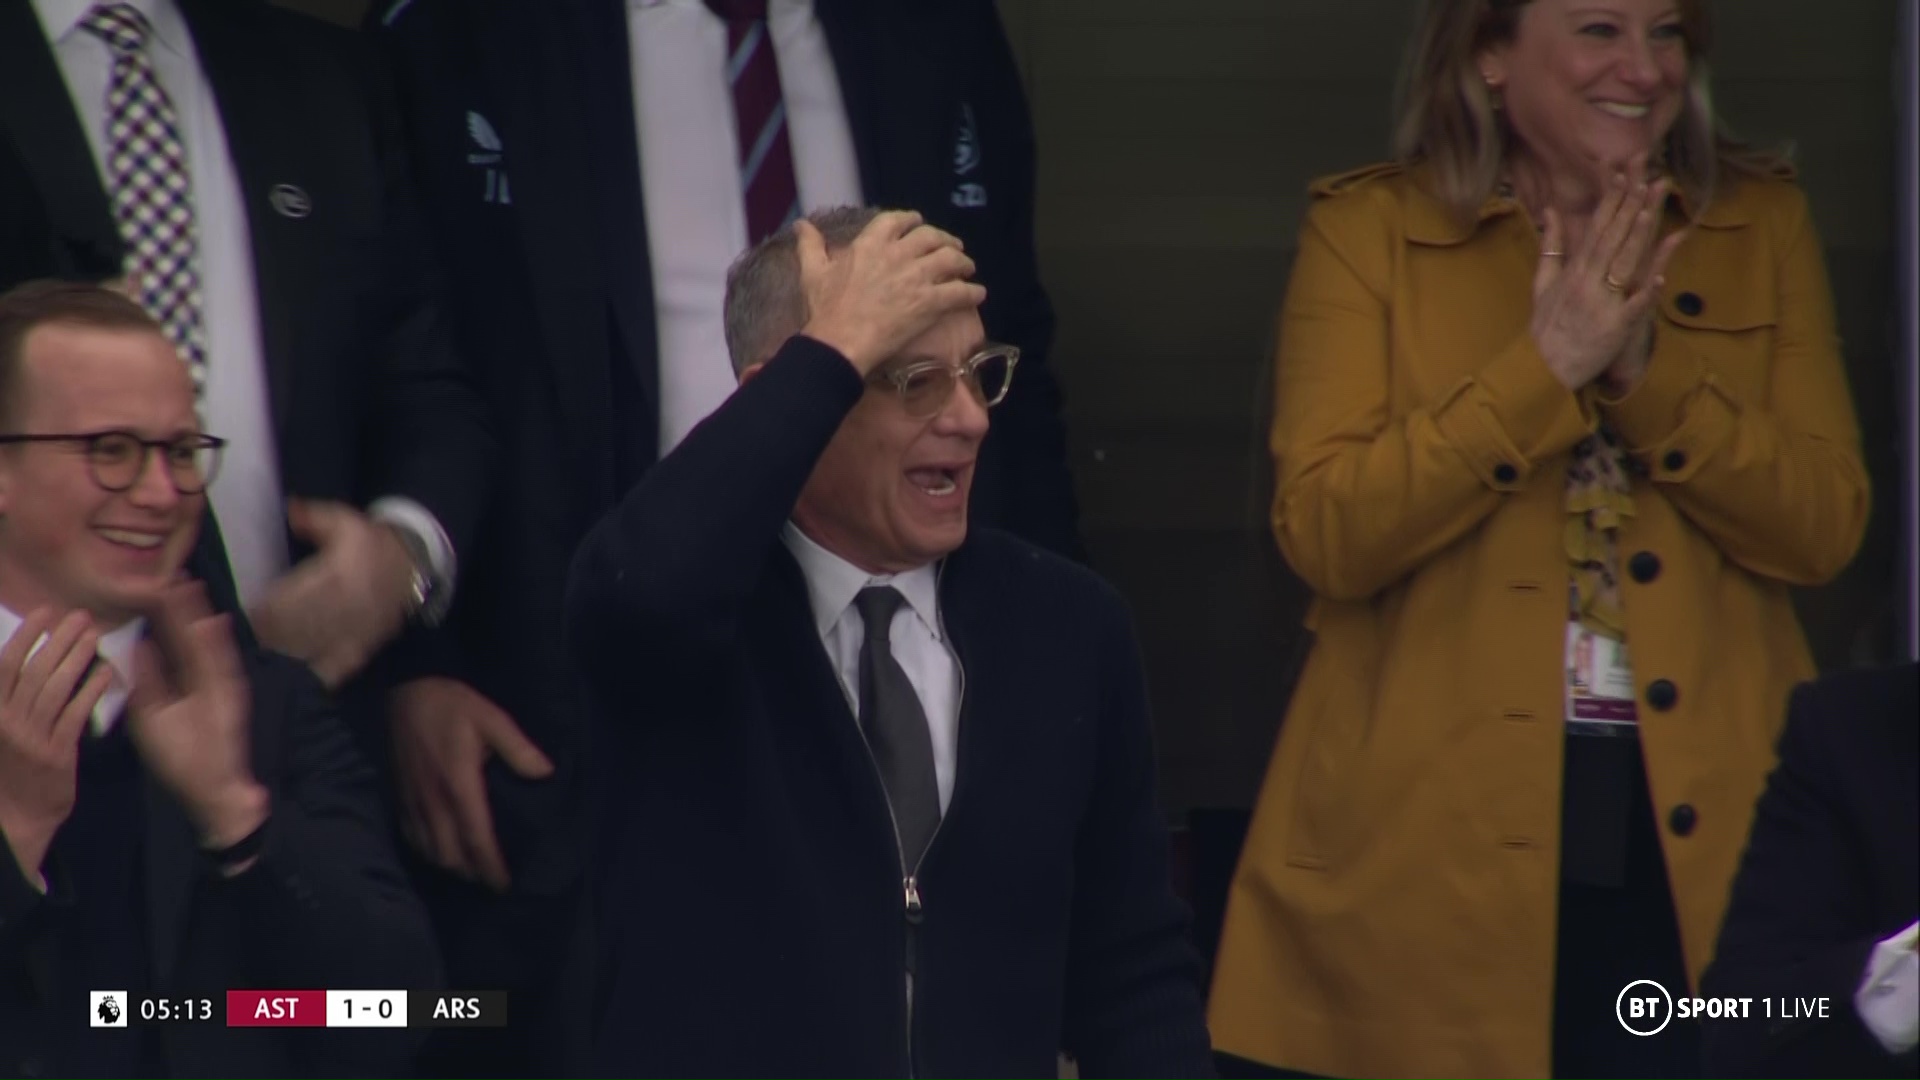 Tom Hanks celebrated Aston Villa’s opening goal